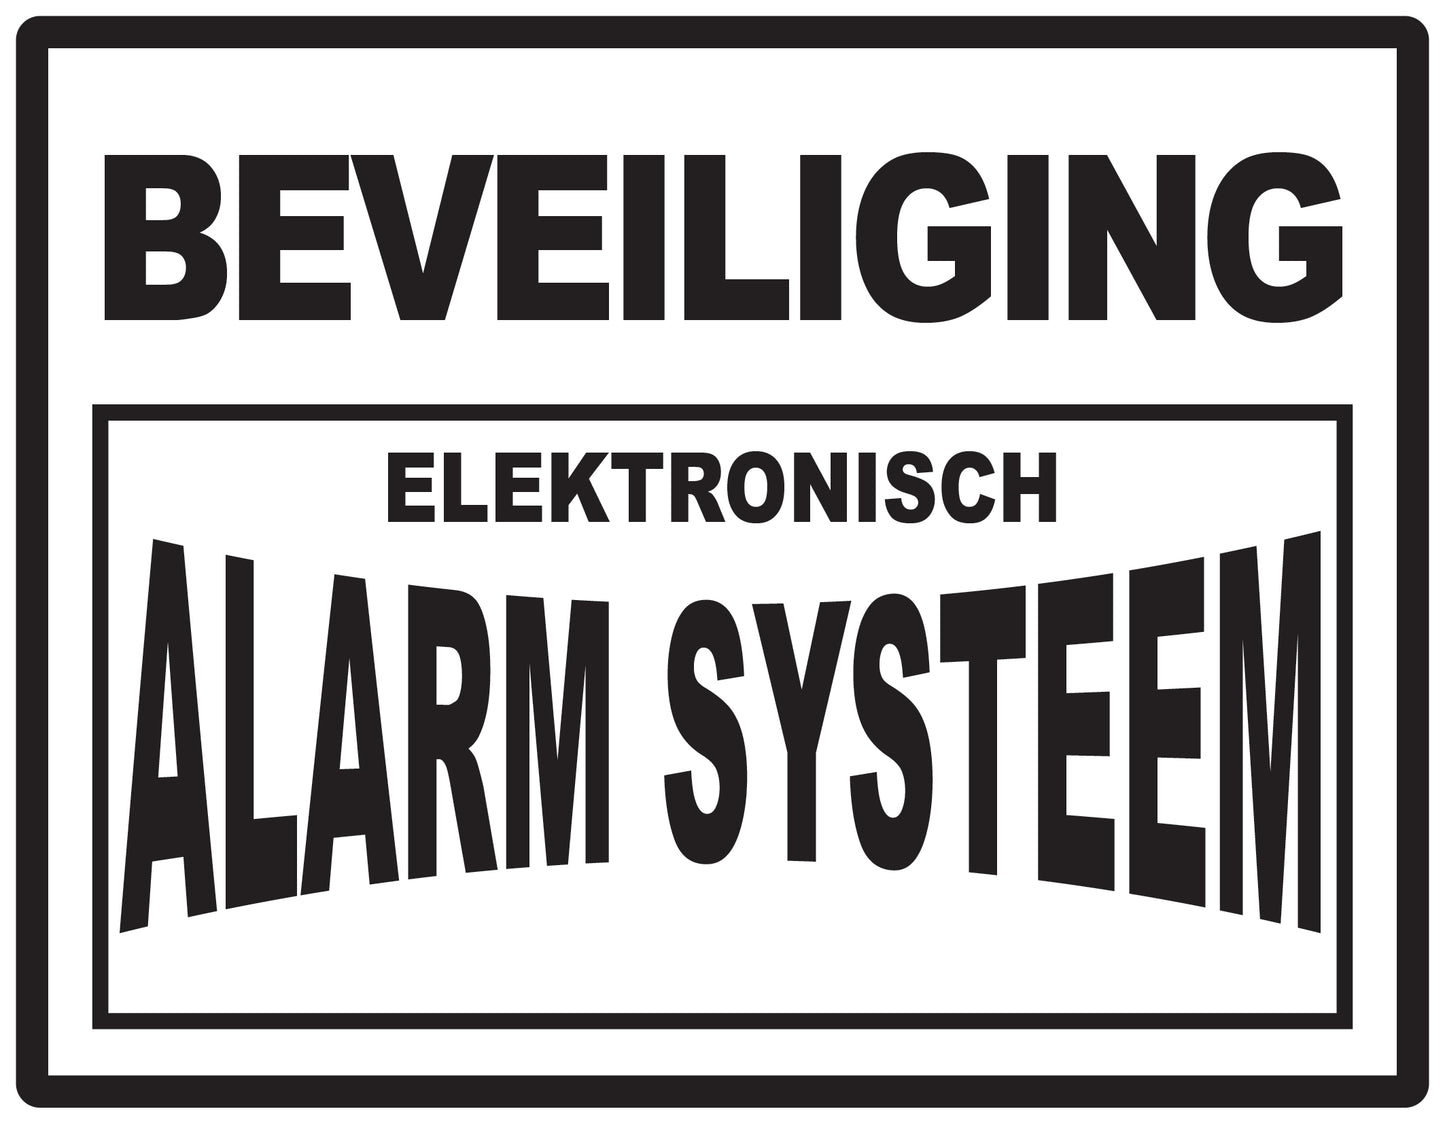 Alarmsticker 10-30 cm EW-ALARM-H-11000-88 Materiaal: wit PVC kunststof